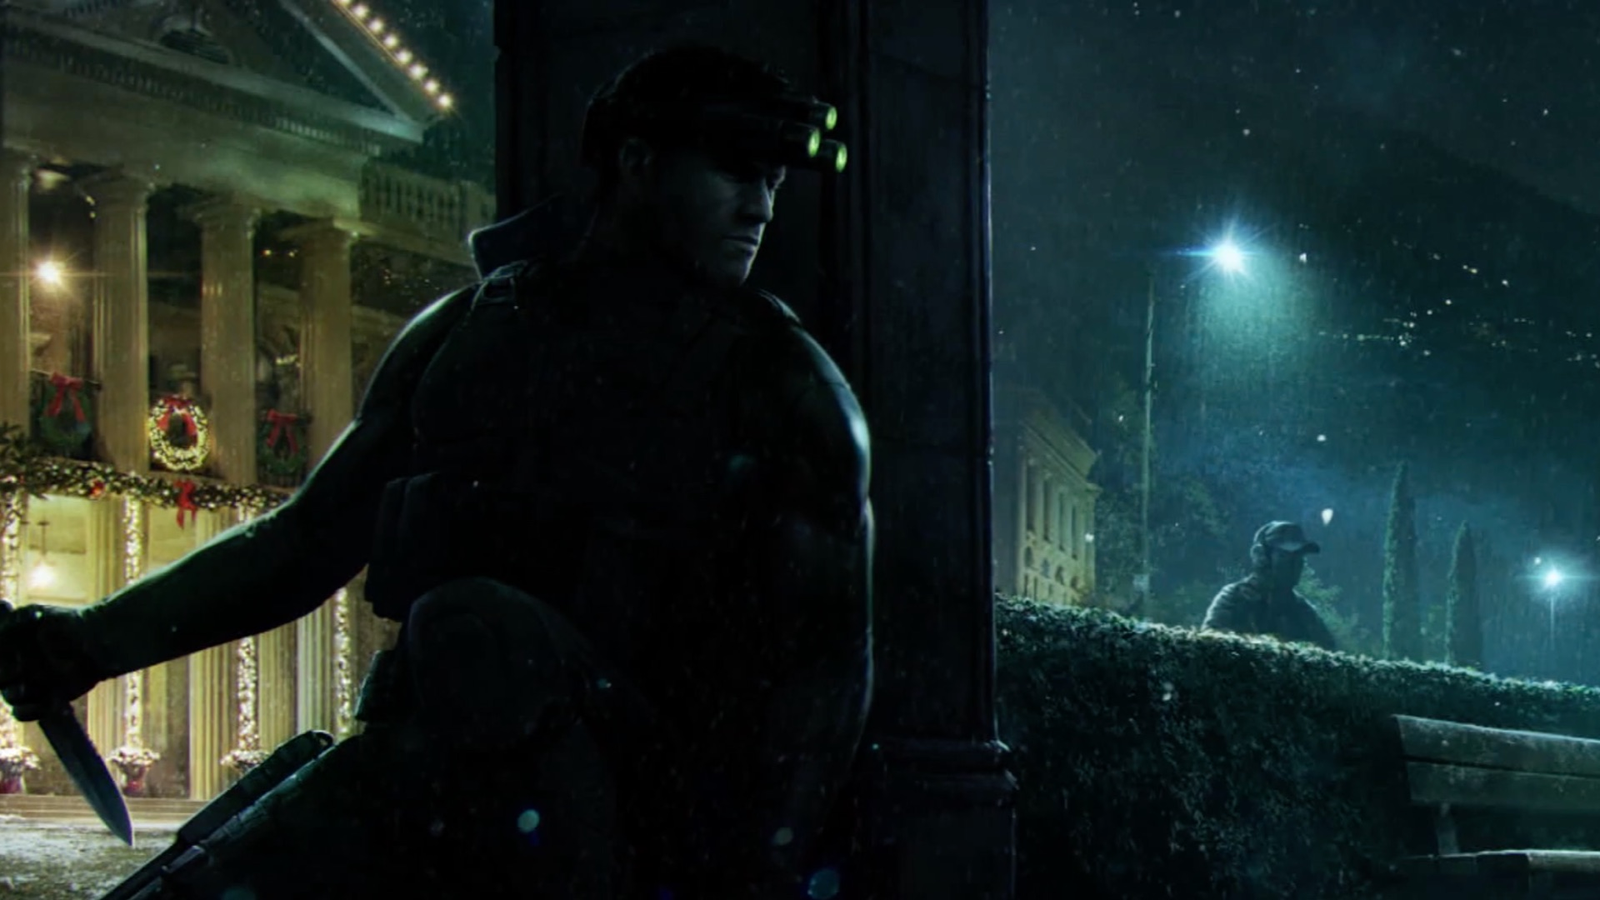 Ubisoft 'Splinter Cell' Remake Job Listing Points To Updated